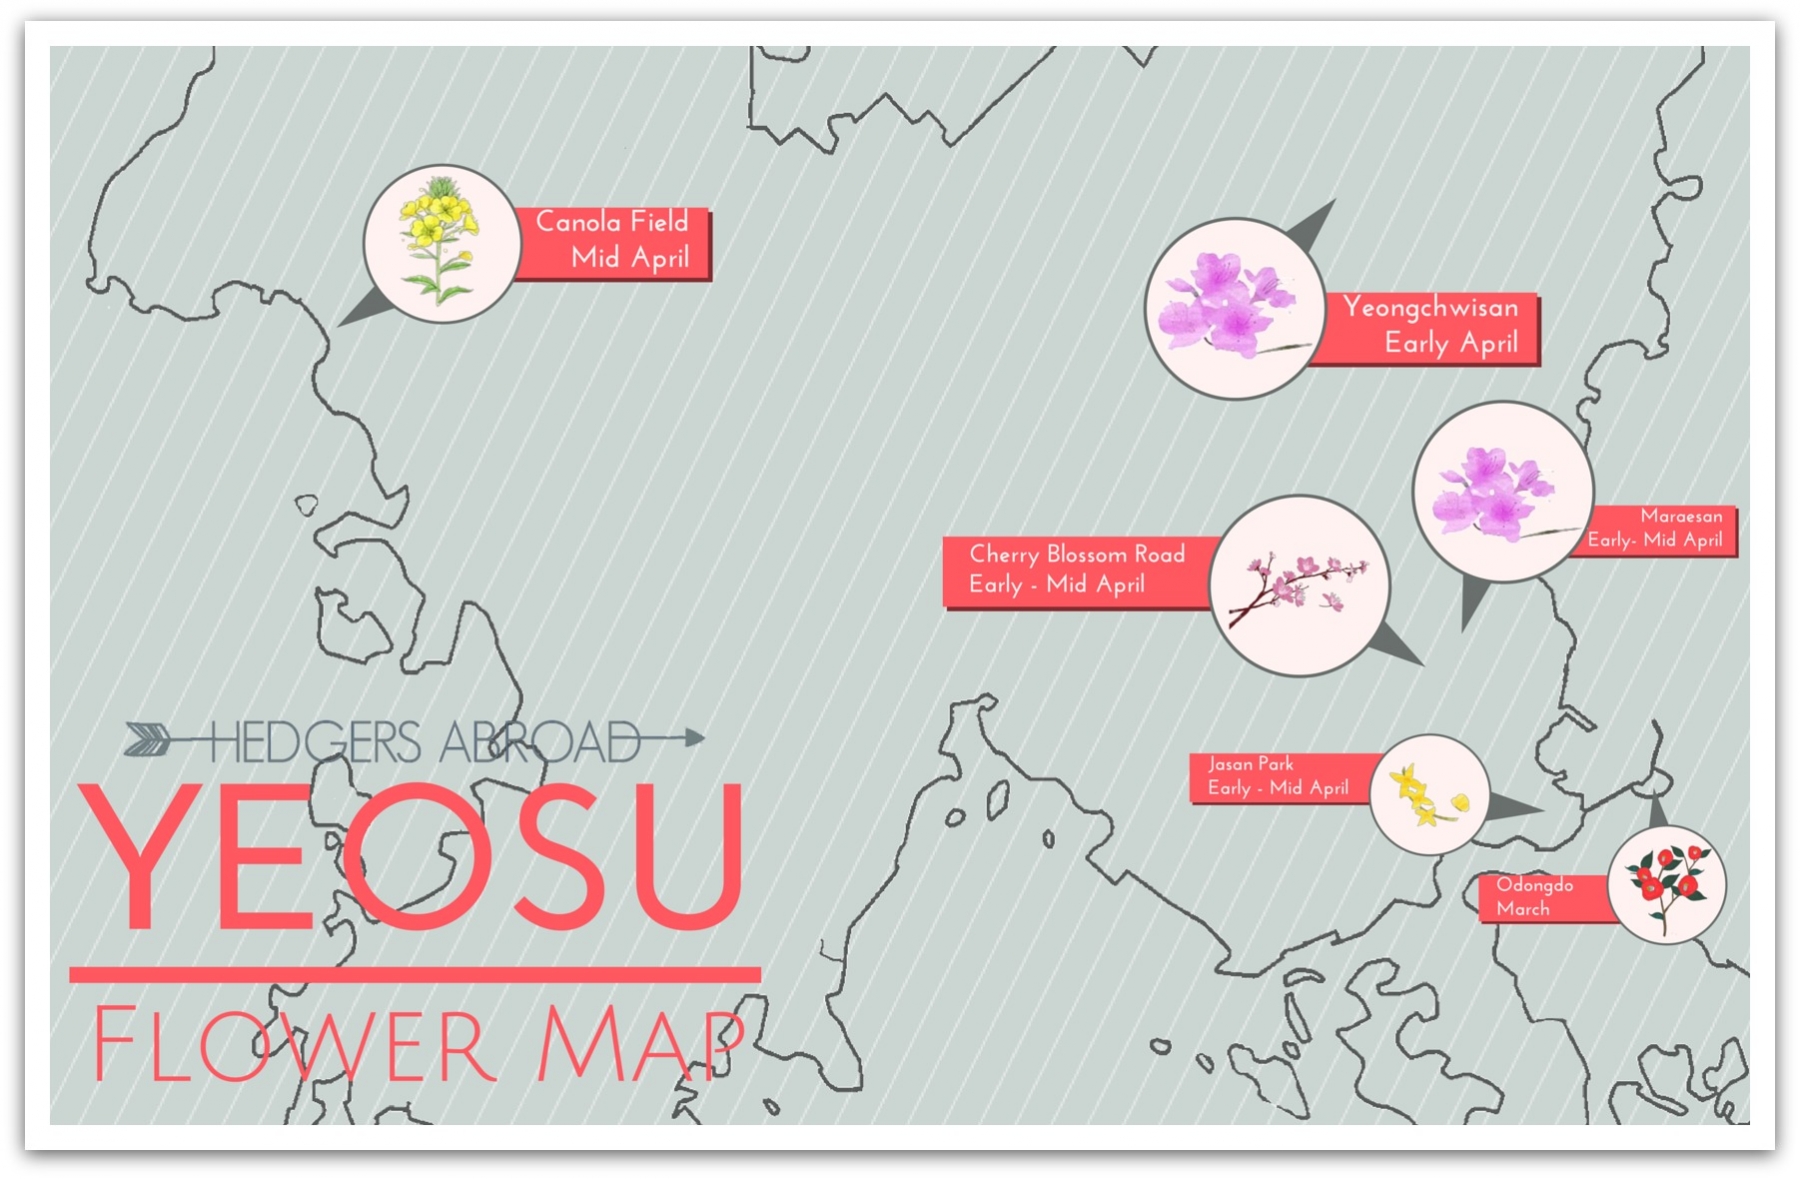 Yeosu flower map